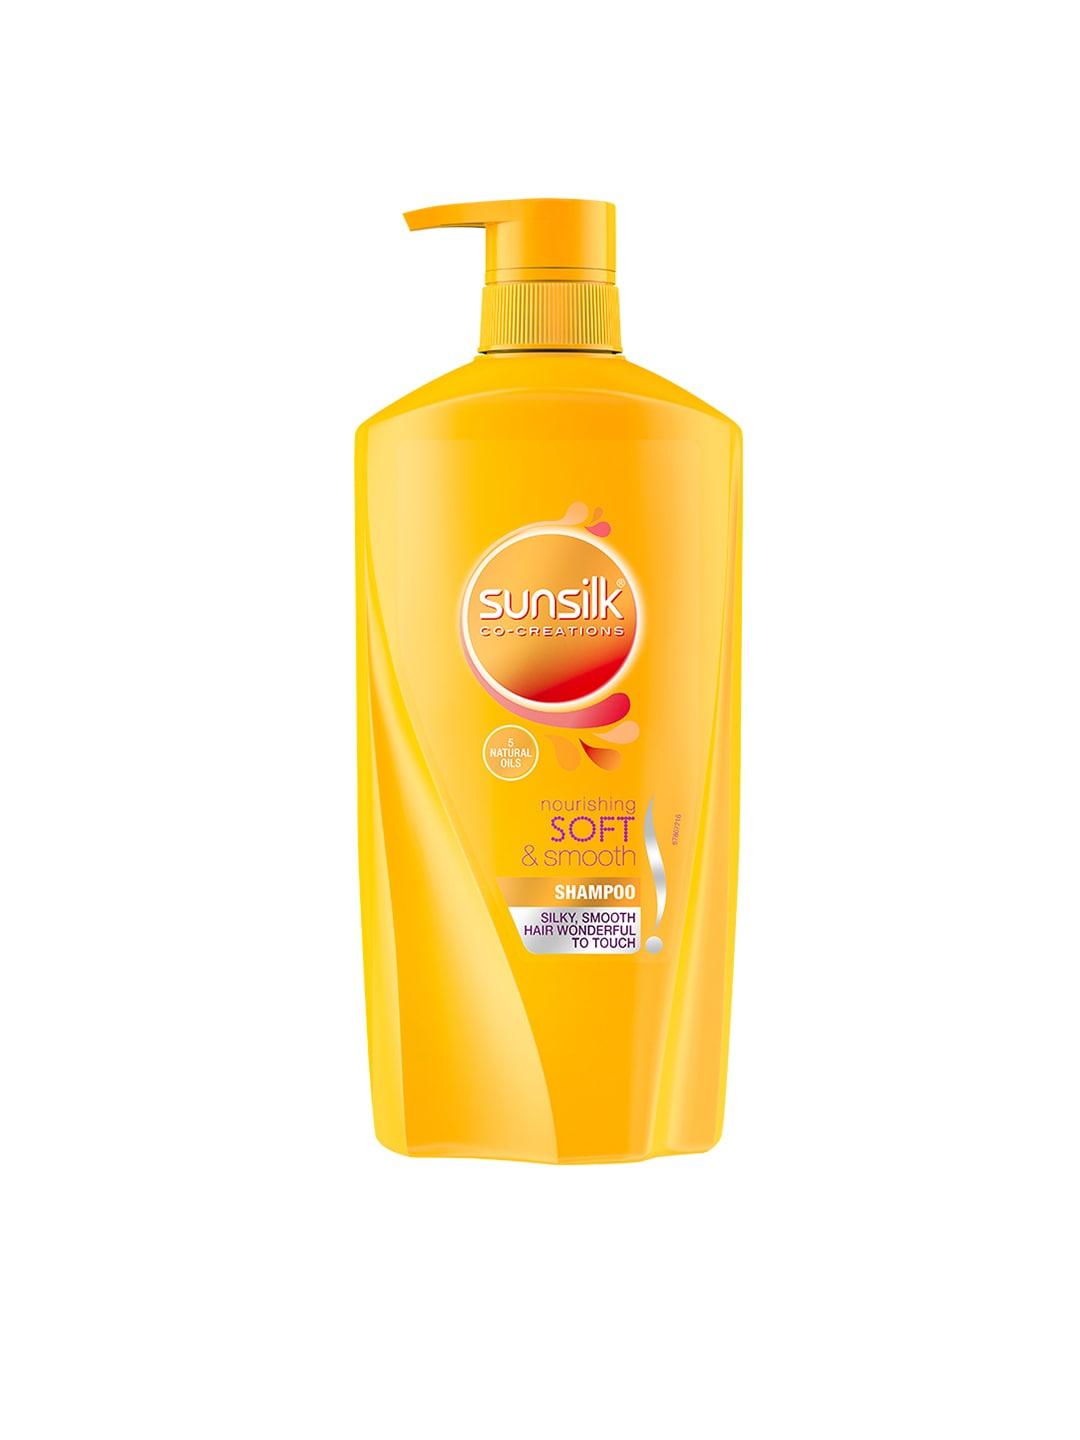 sunsilk-nourishing-soft-&-smooth-shampoo-with-egg-protein-&-almond-oil-&-vitamin-c-650-ml